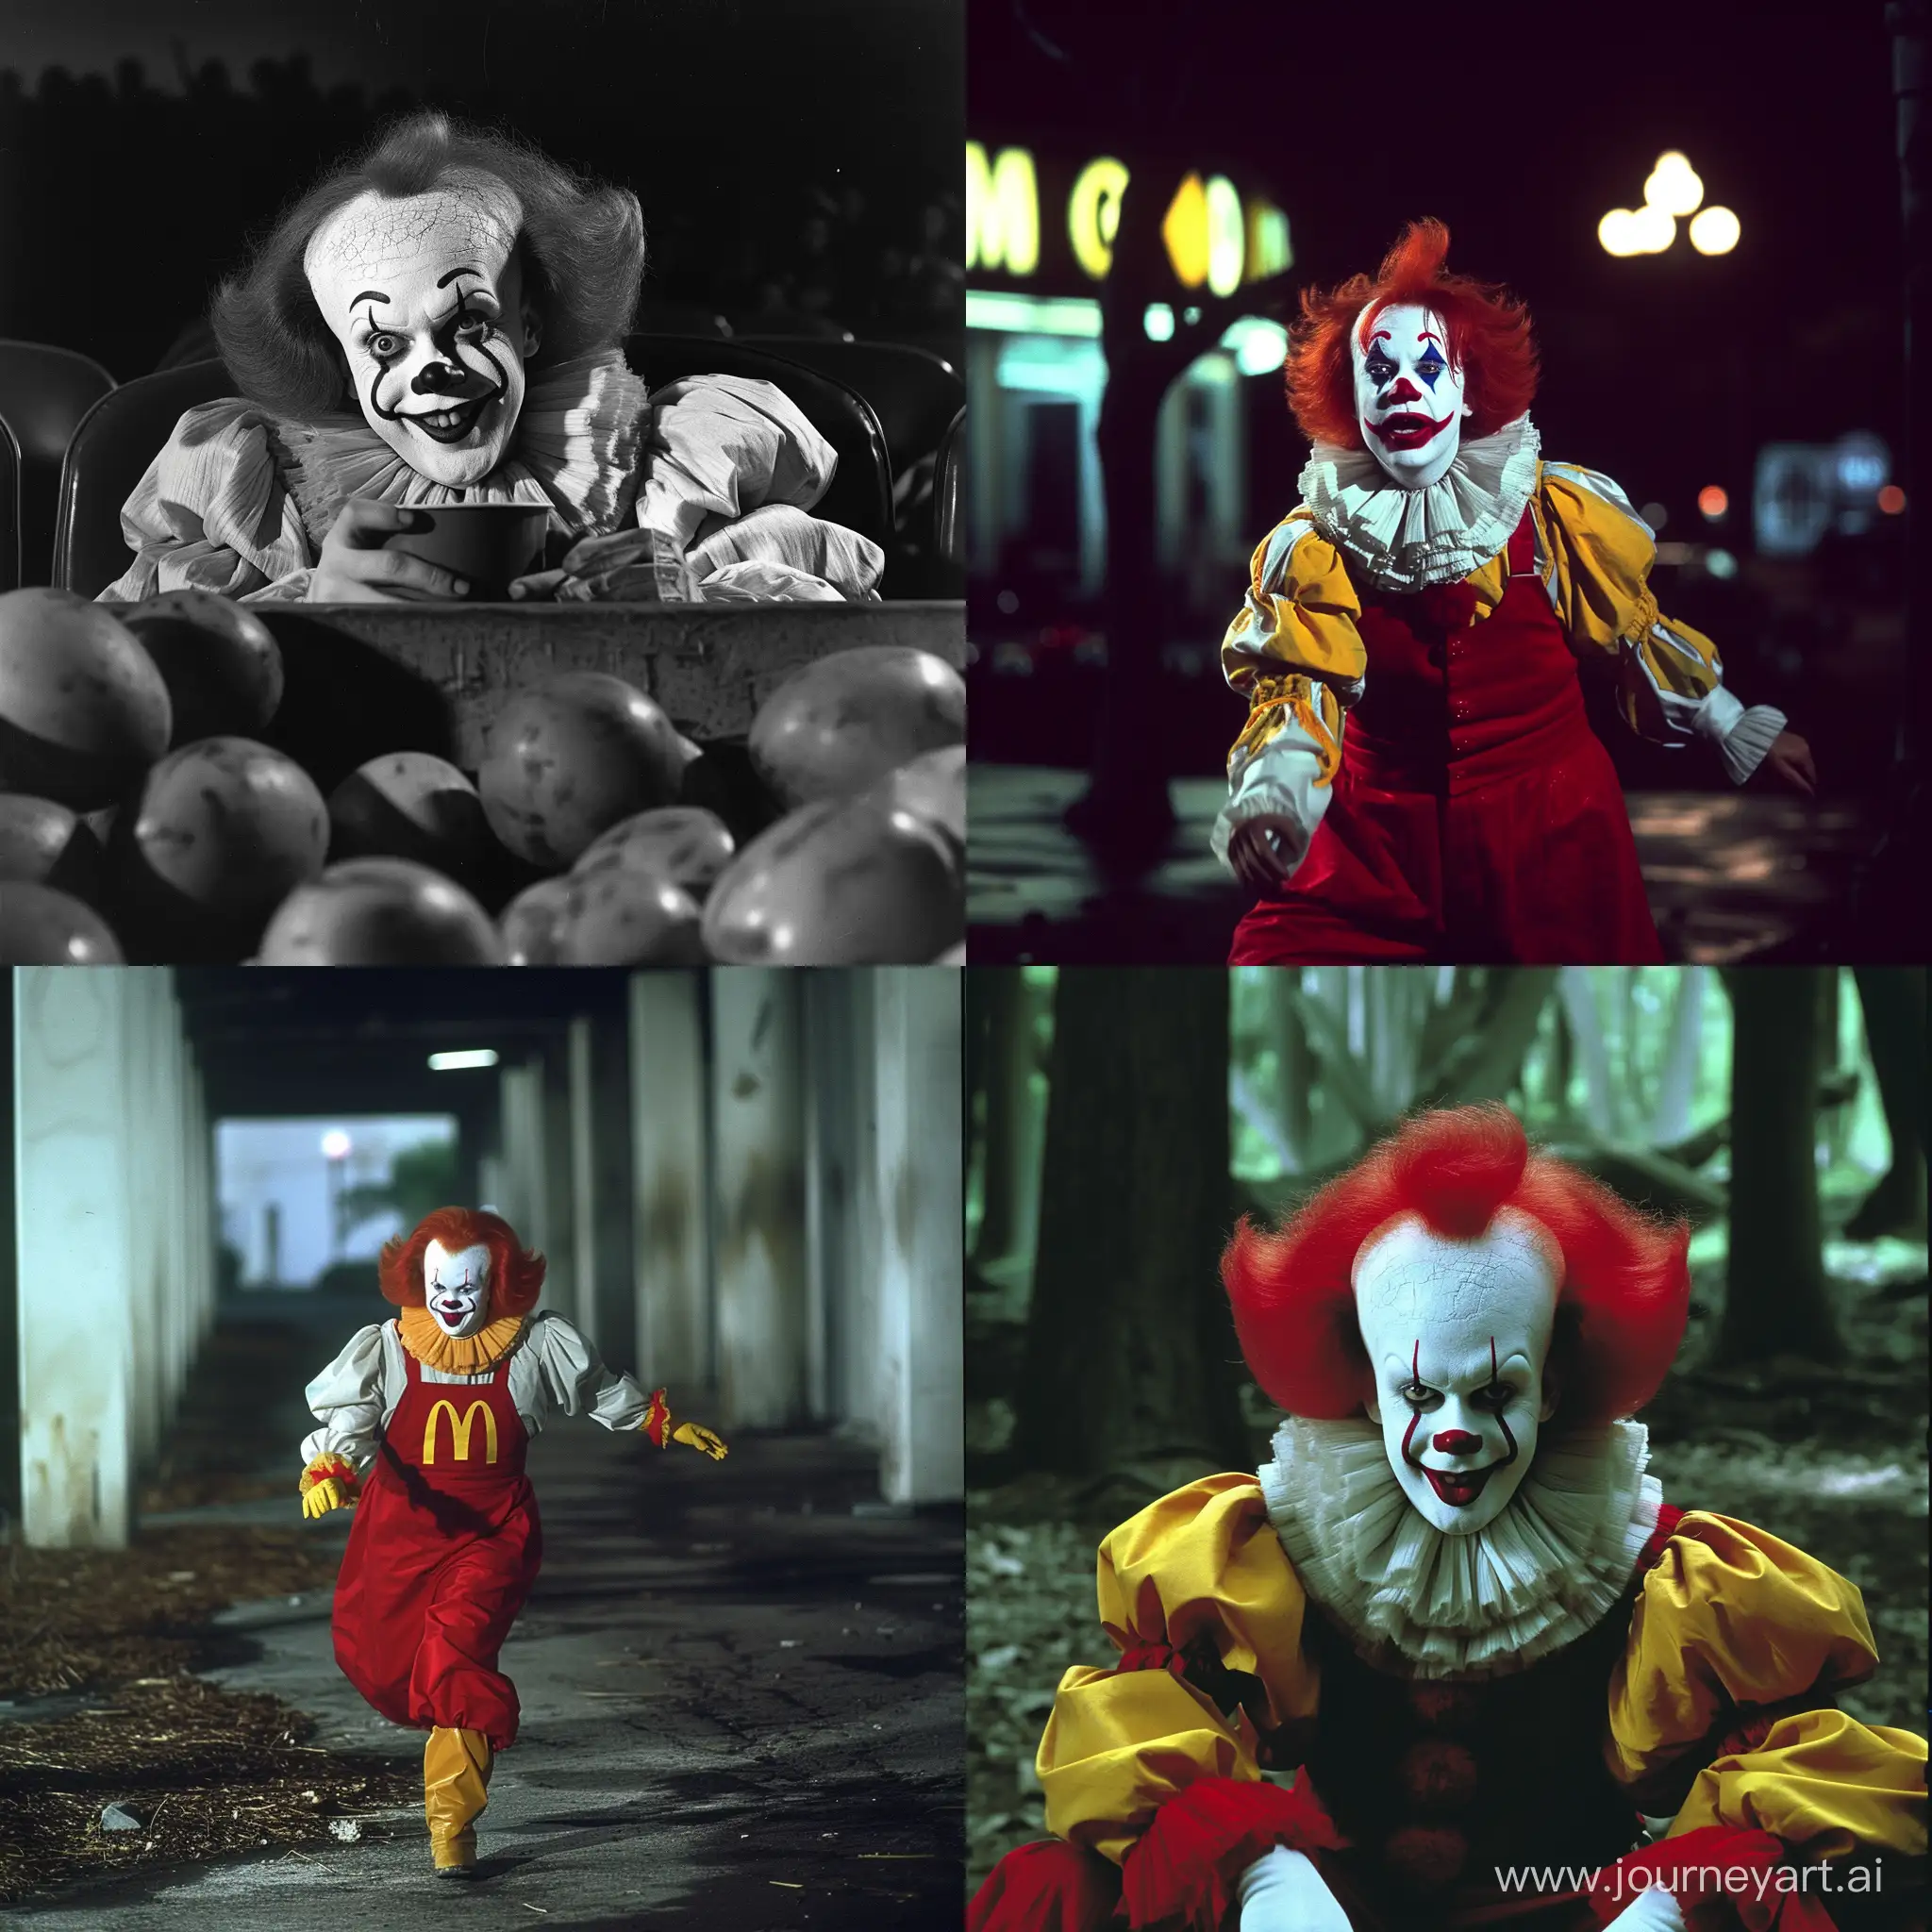 Ronald Mcdonald at 80s horror movies